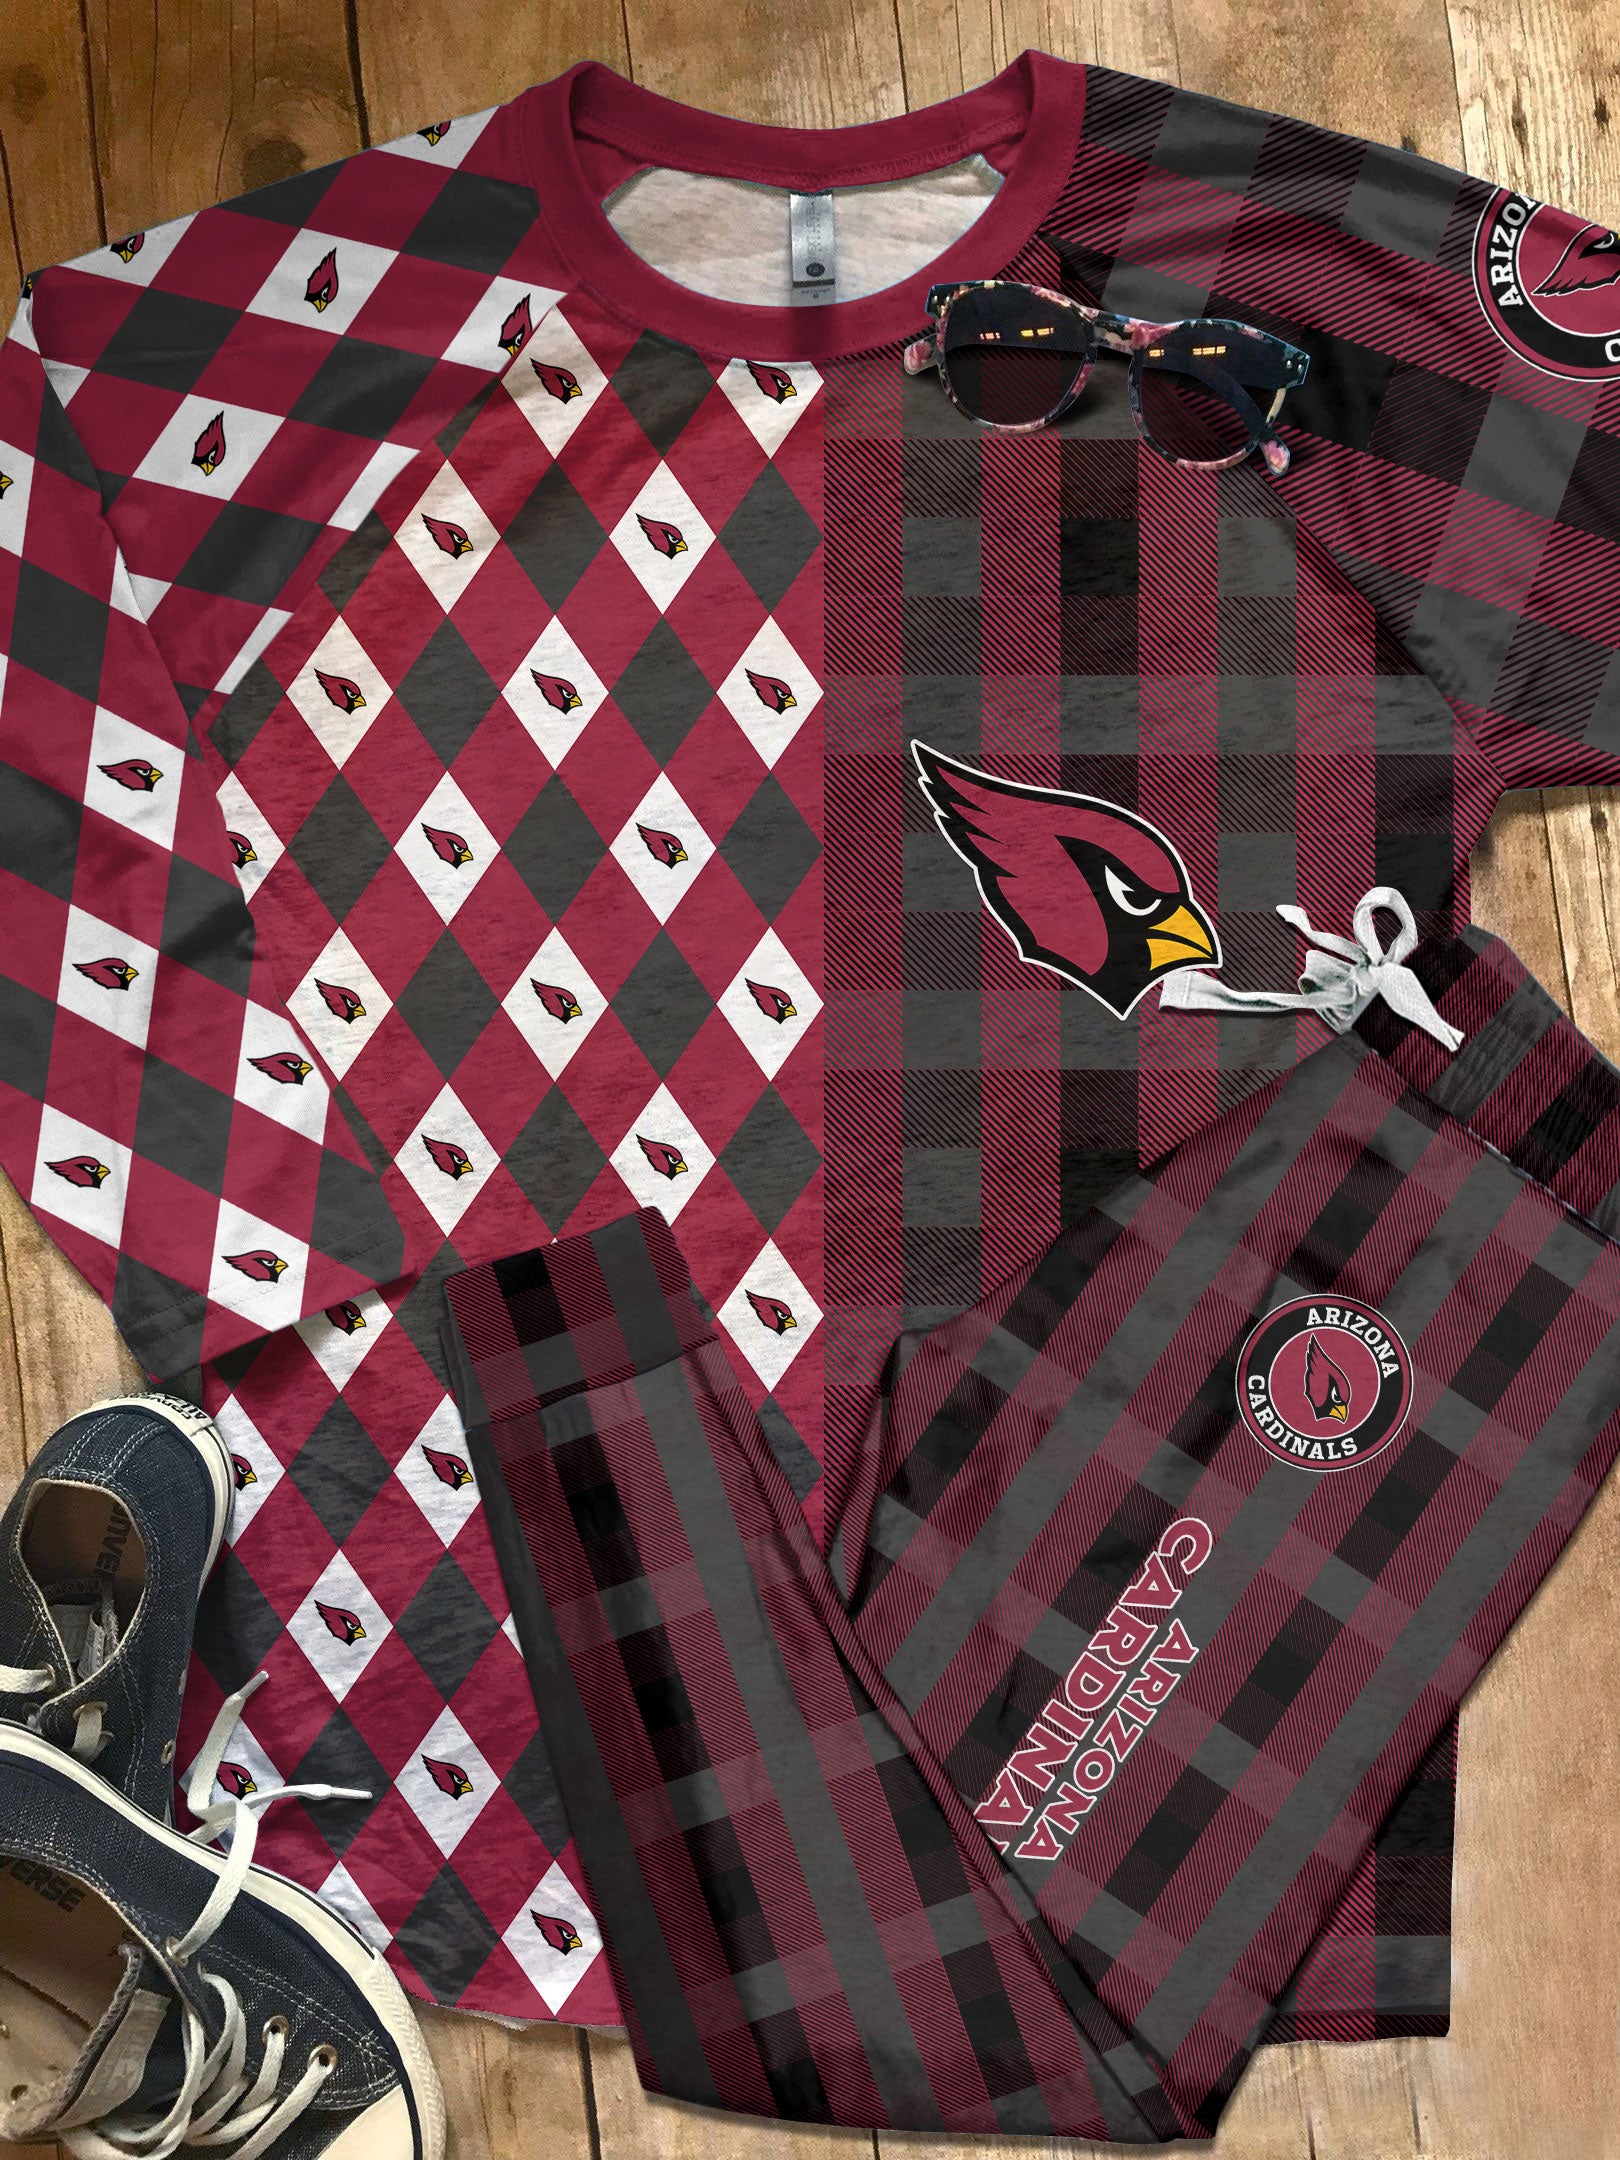 Arizona Cardinals Plaid Pattern Limited Edition Kid & Adult Sizes Pajamas Set NEW087626